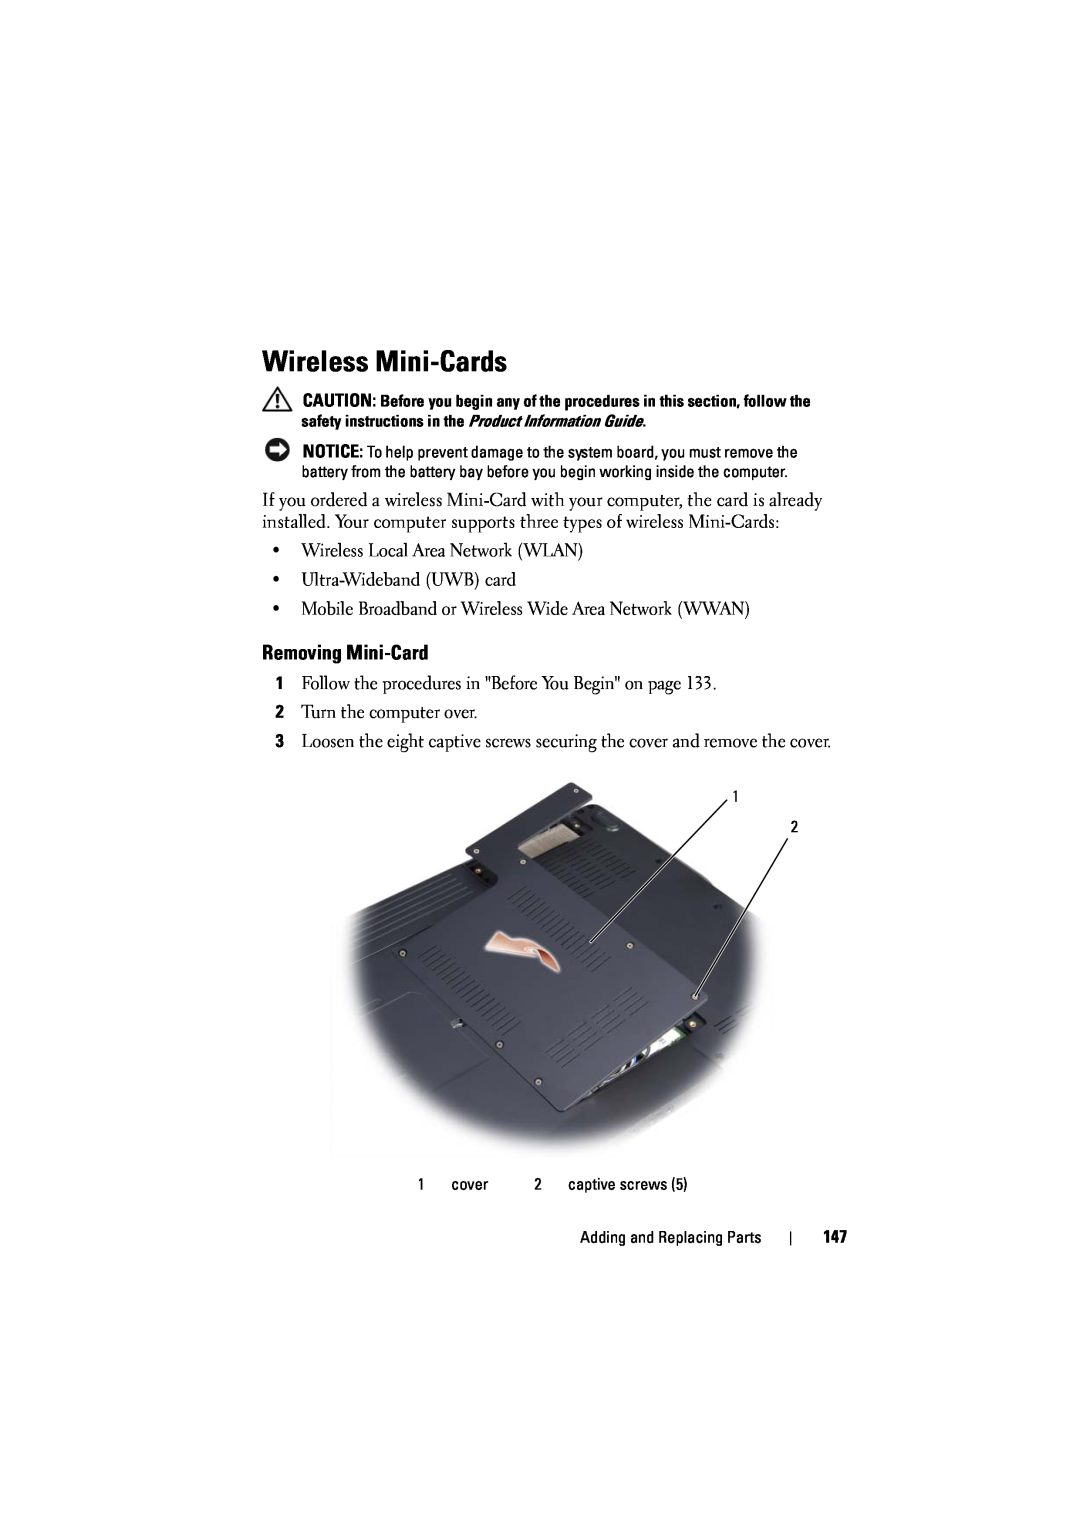 Dell 1526, 1525 owner manual Wireless Mini-Cards, Removing Mini-Card 